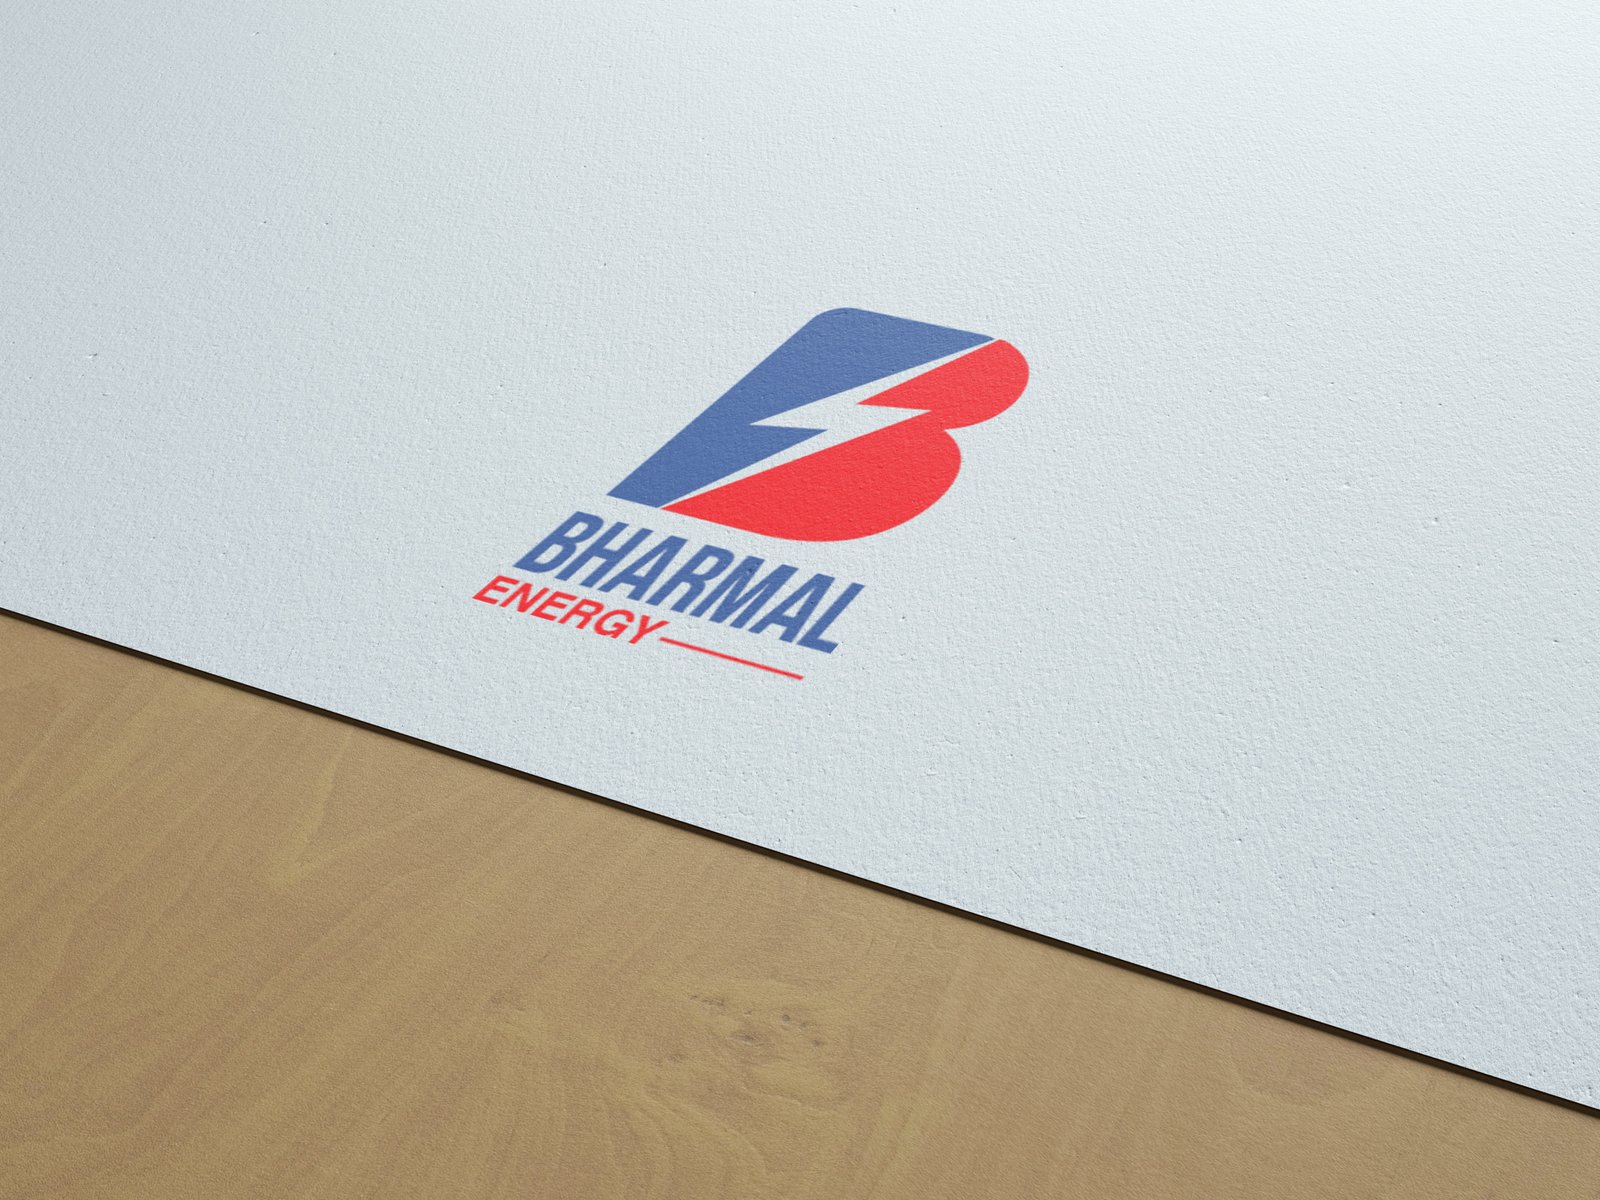 Bharmal energy solar company logo design by Badri Design